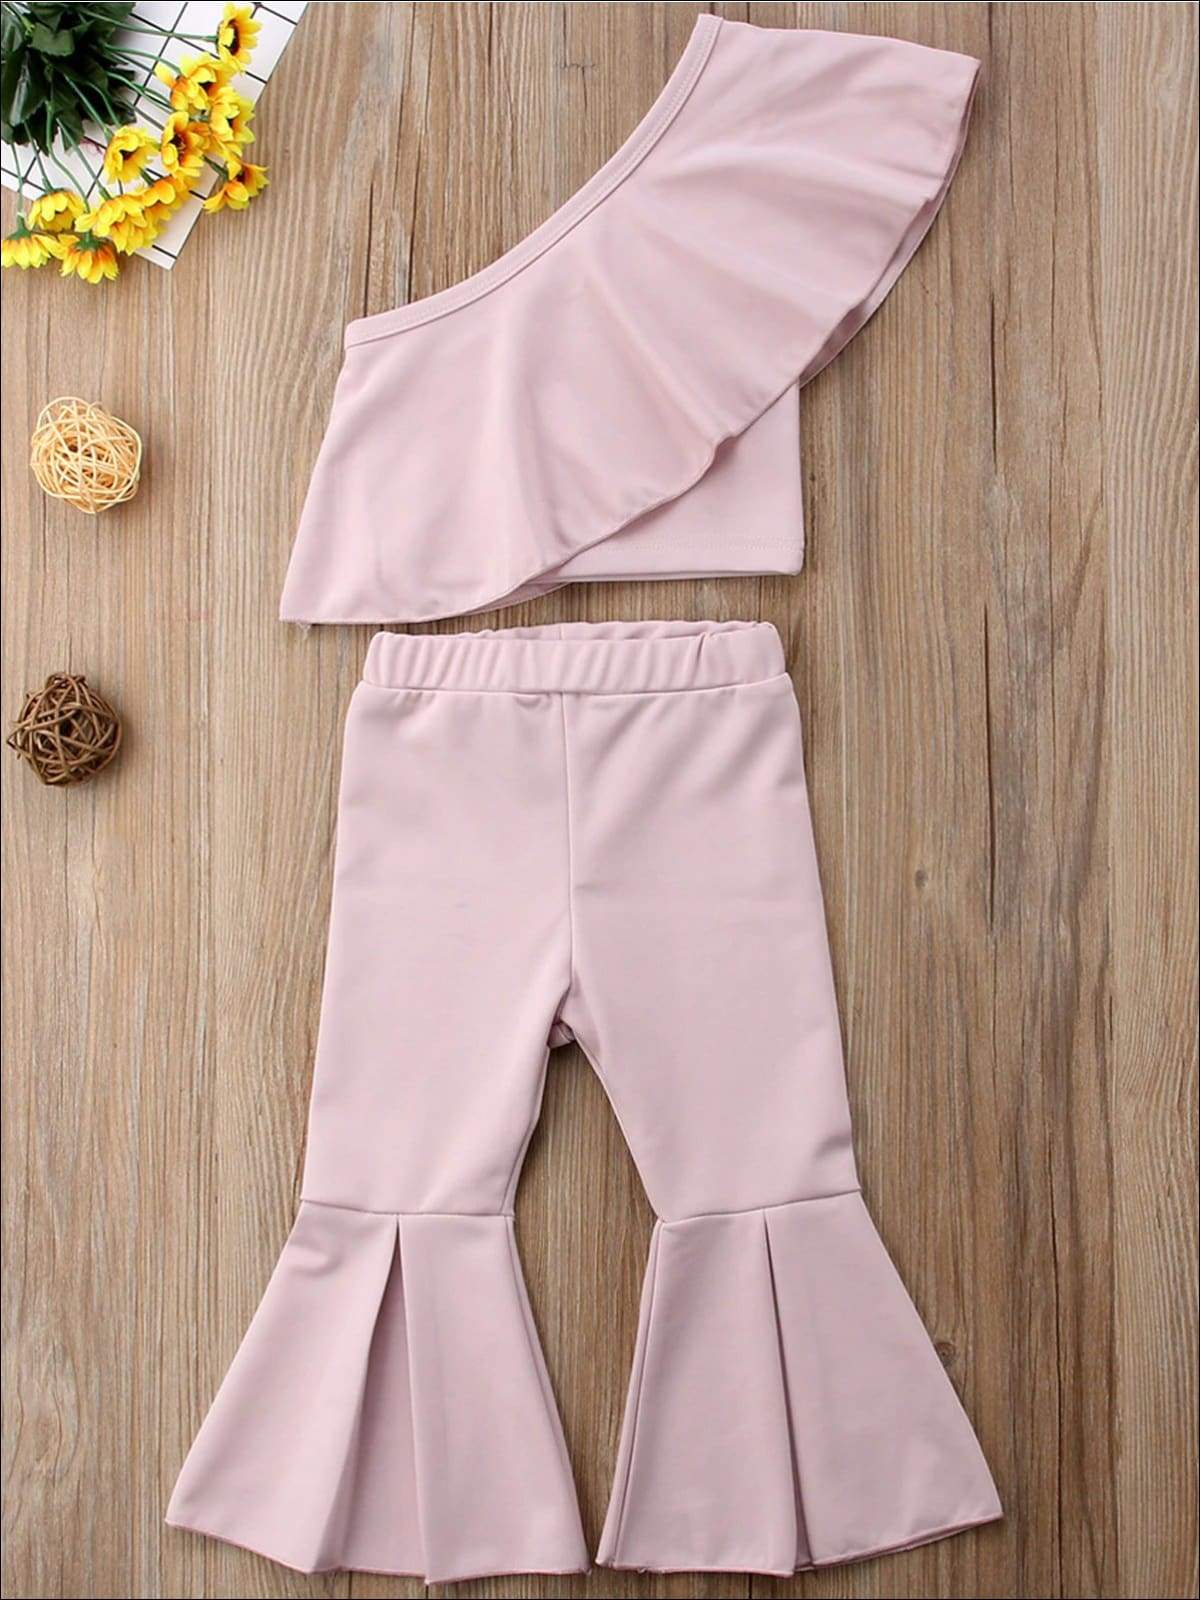 Girl Pink One Shoulder Ruffled Top & Bell Bottom Pants Set - Girls Spring Casual Set